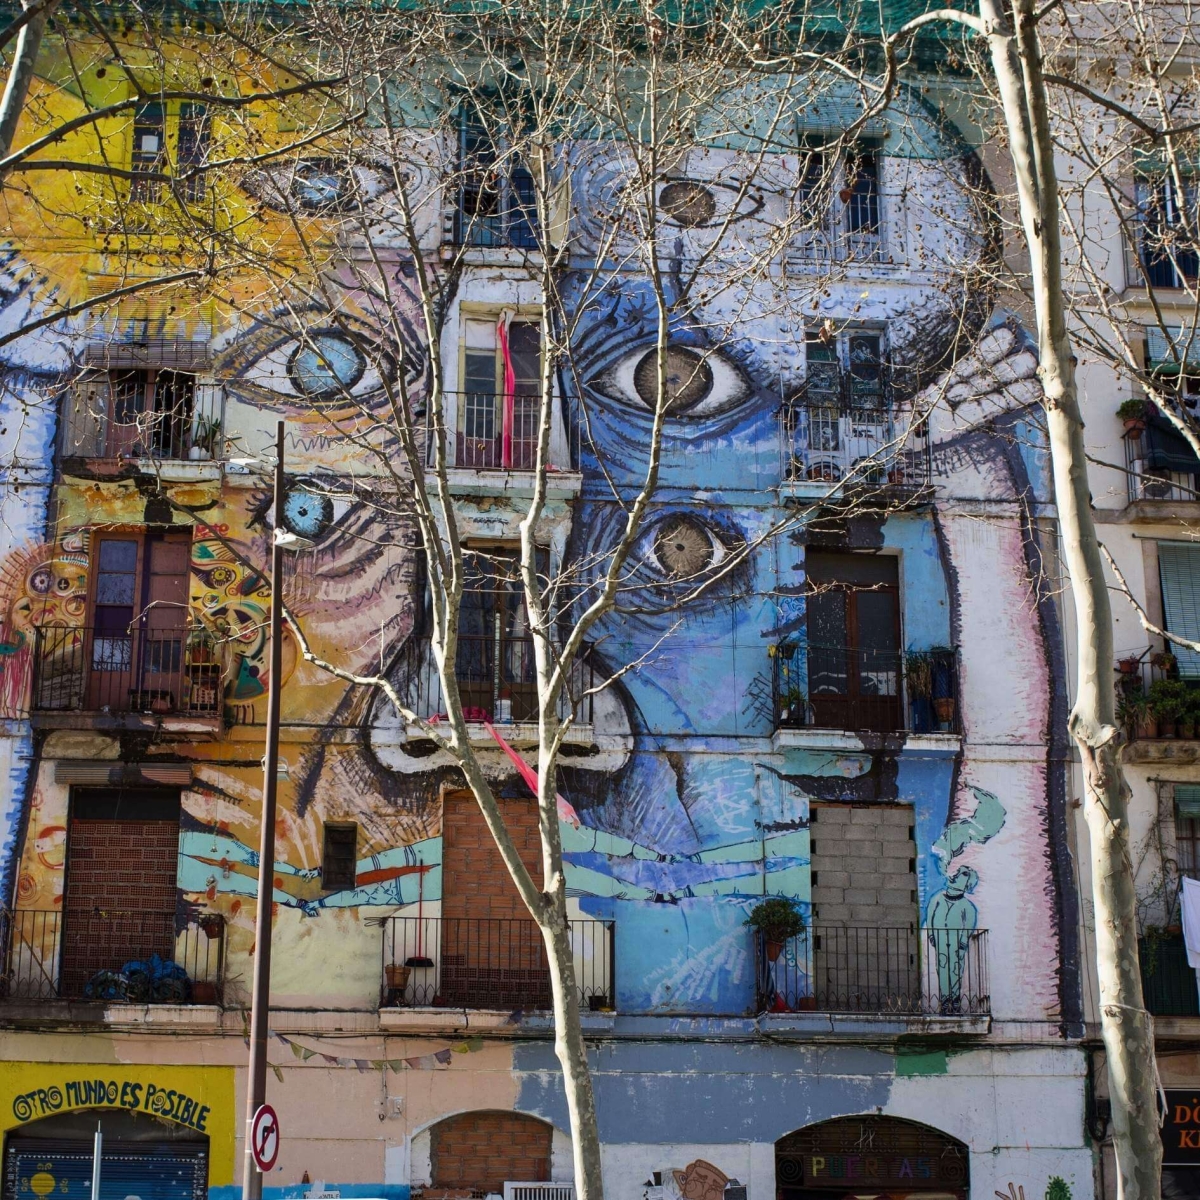 Street art in El Raval district in Barcelona, Spain